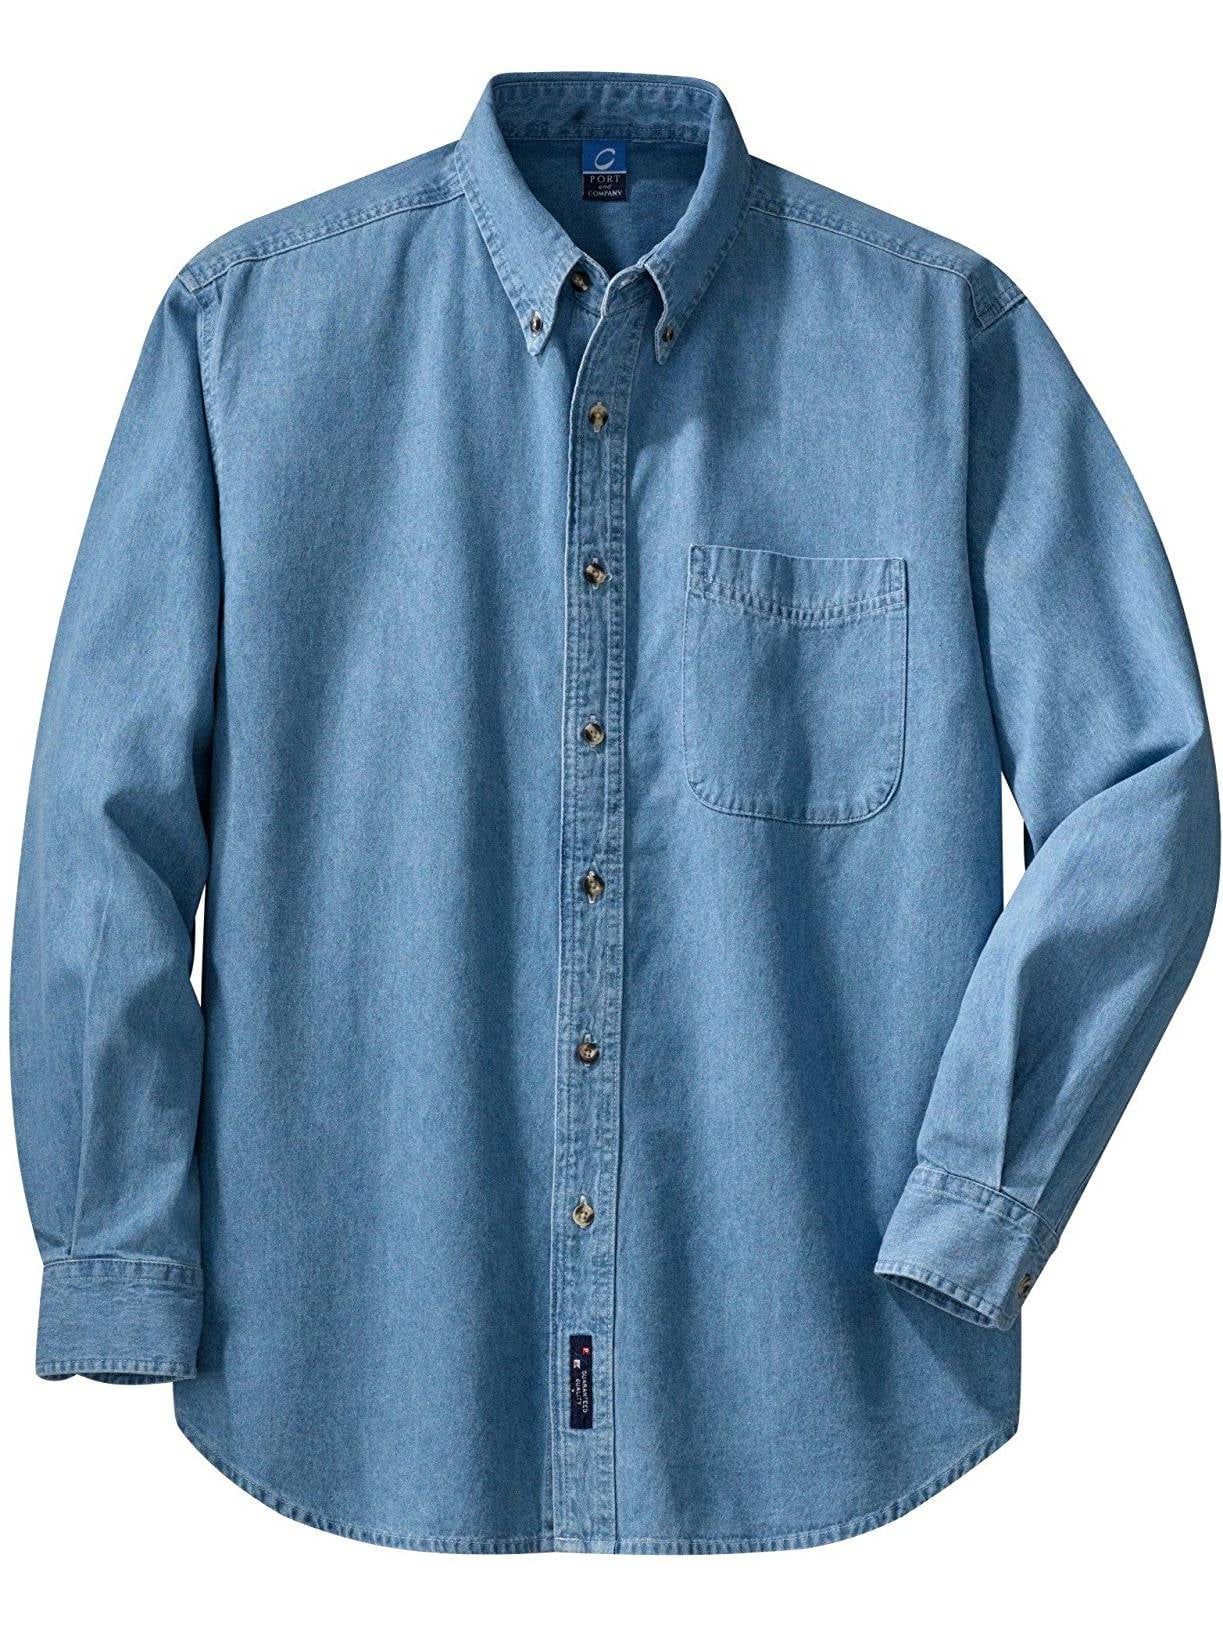 Port & Company - Port & Company Long Sleeve Denim Shirt, - Walmart.com ...